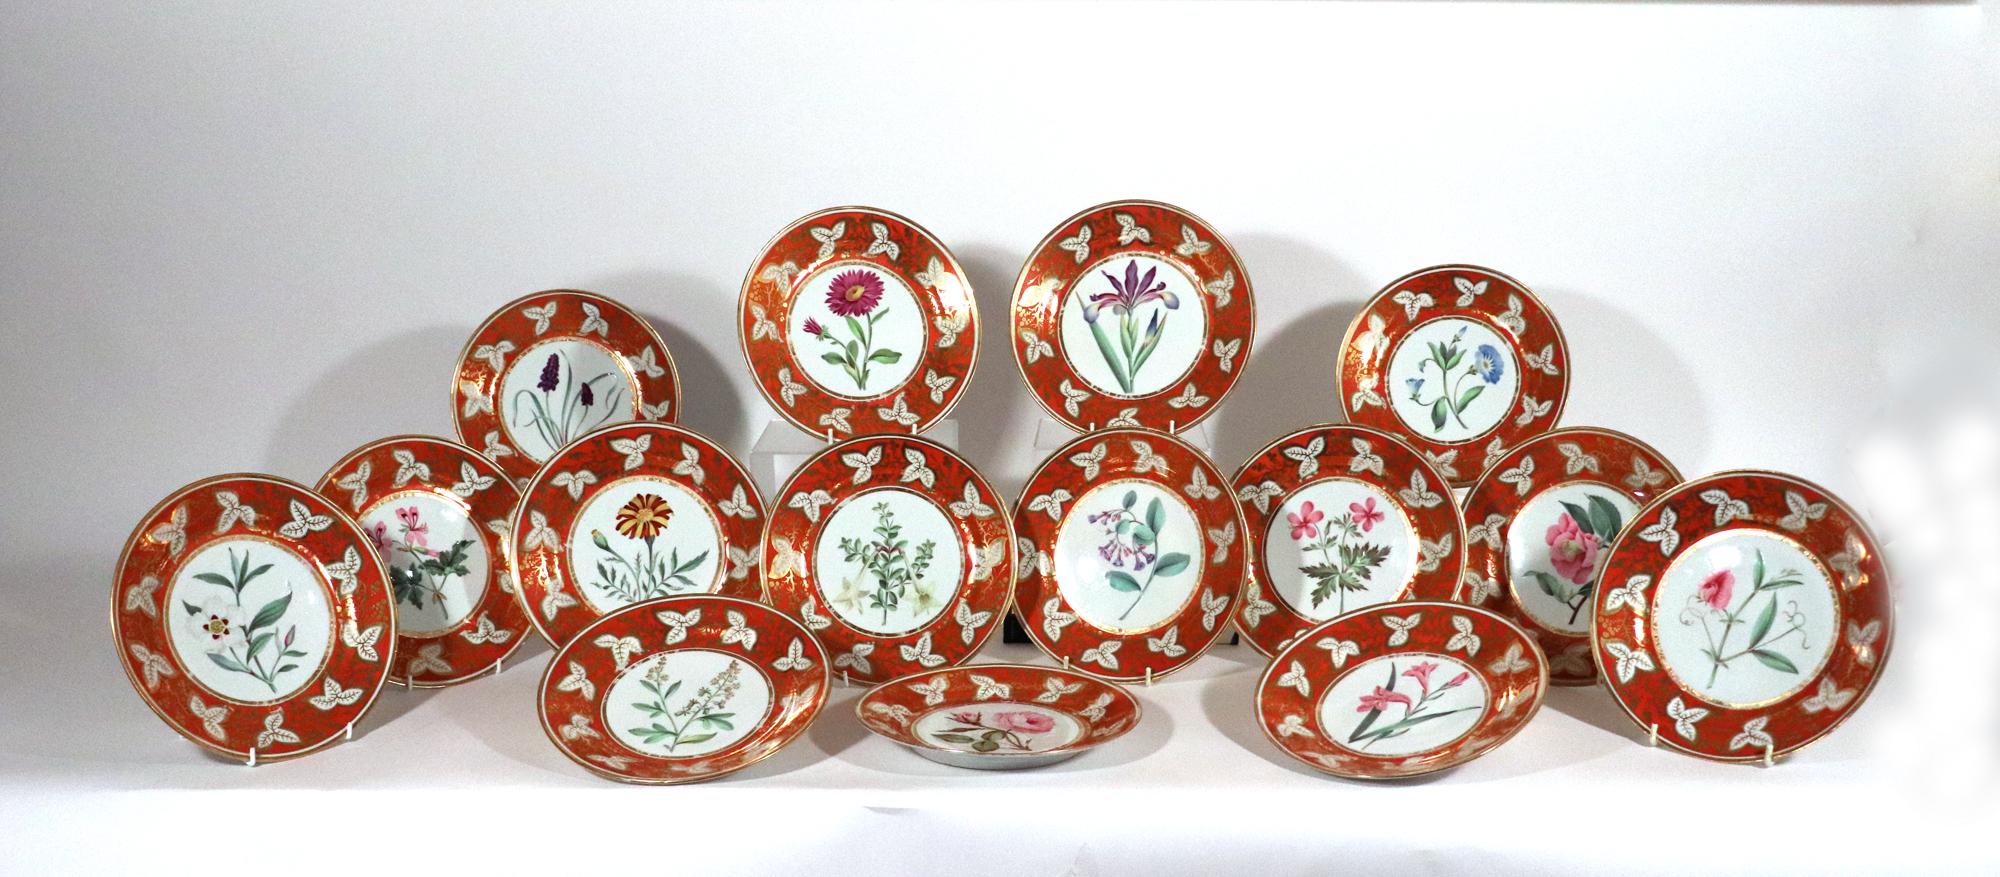 English Chamberlain's Worcester Porcelain Twenty Three Piece Botanical Dessert Service For Sale